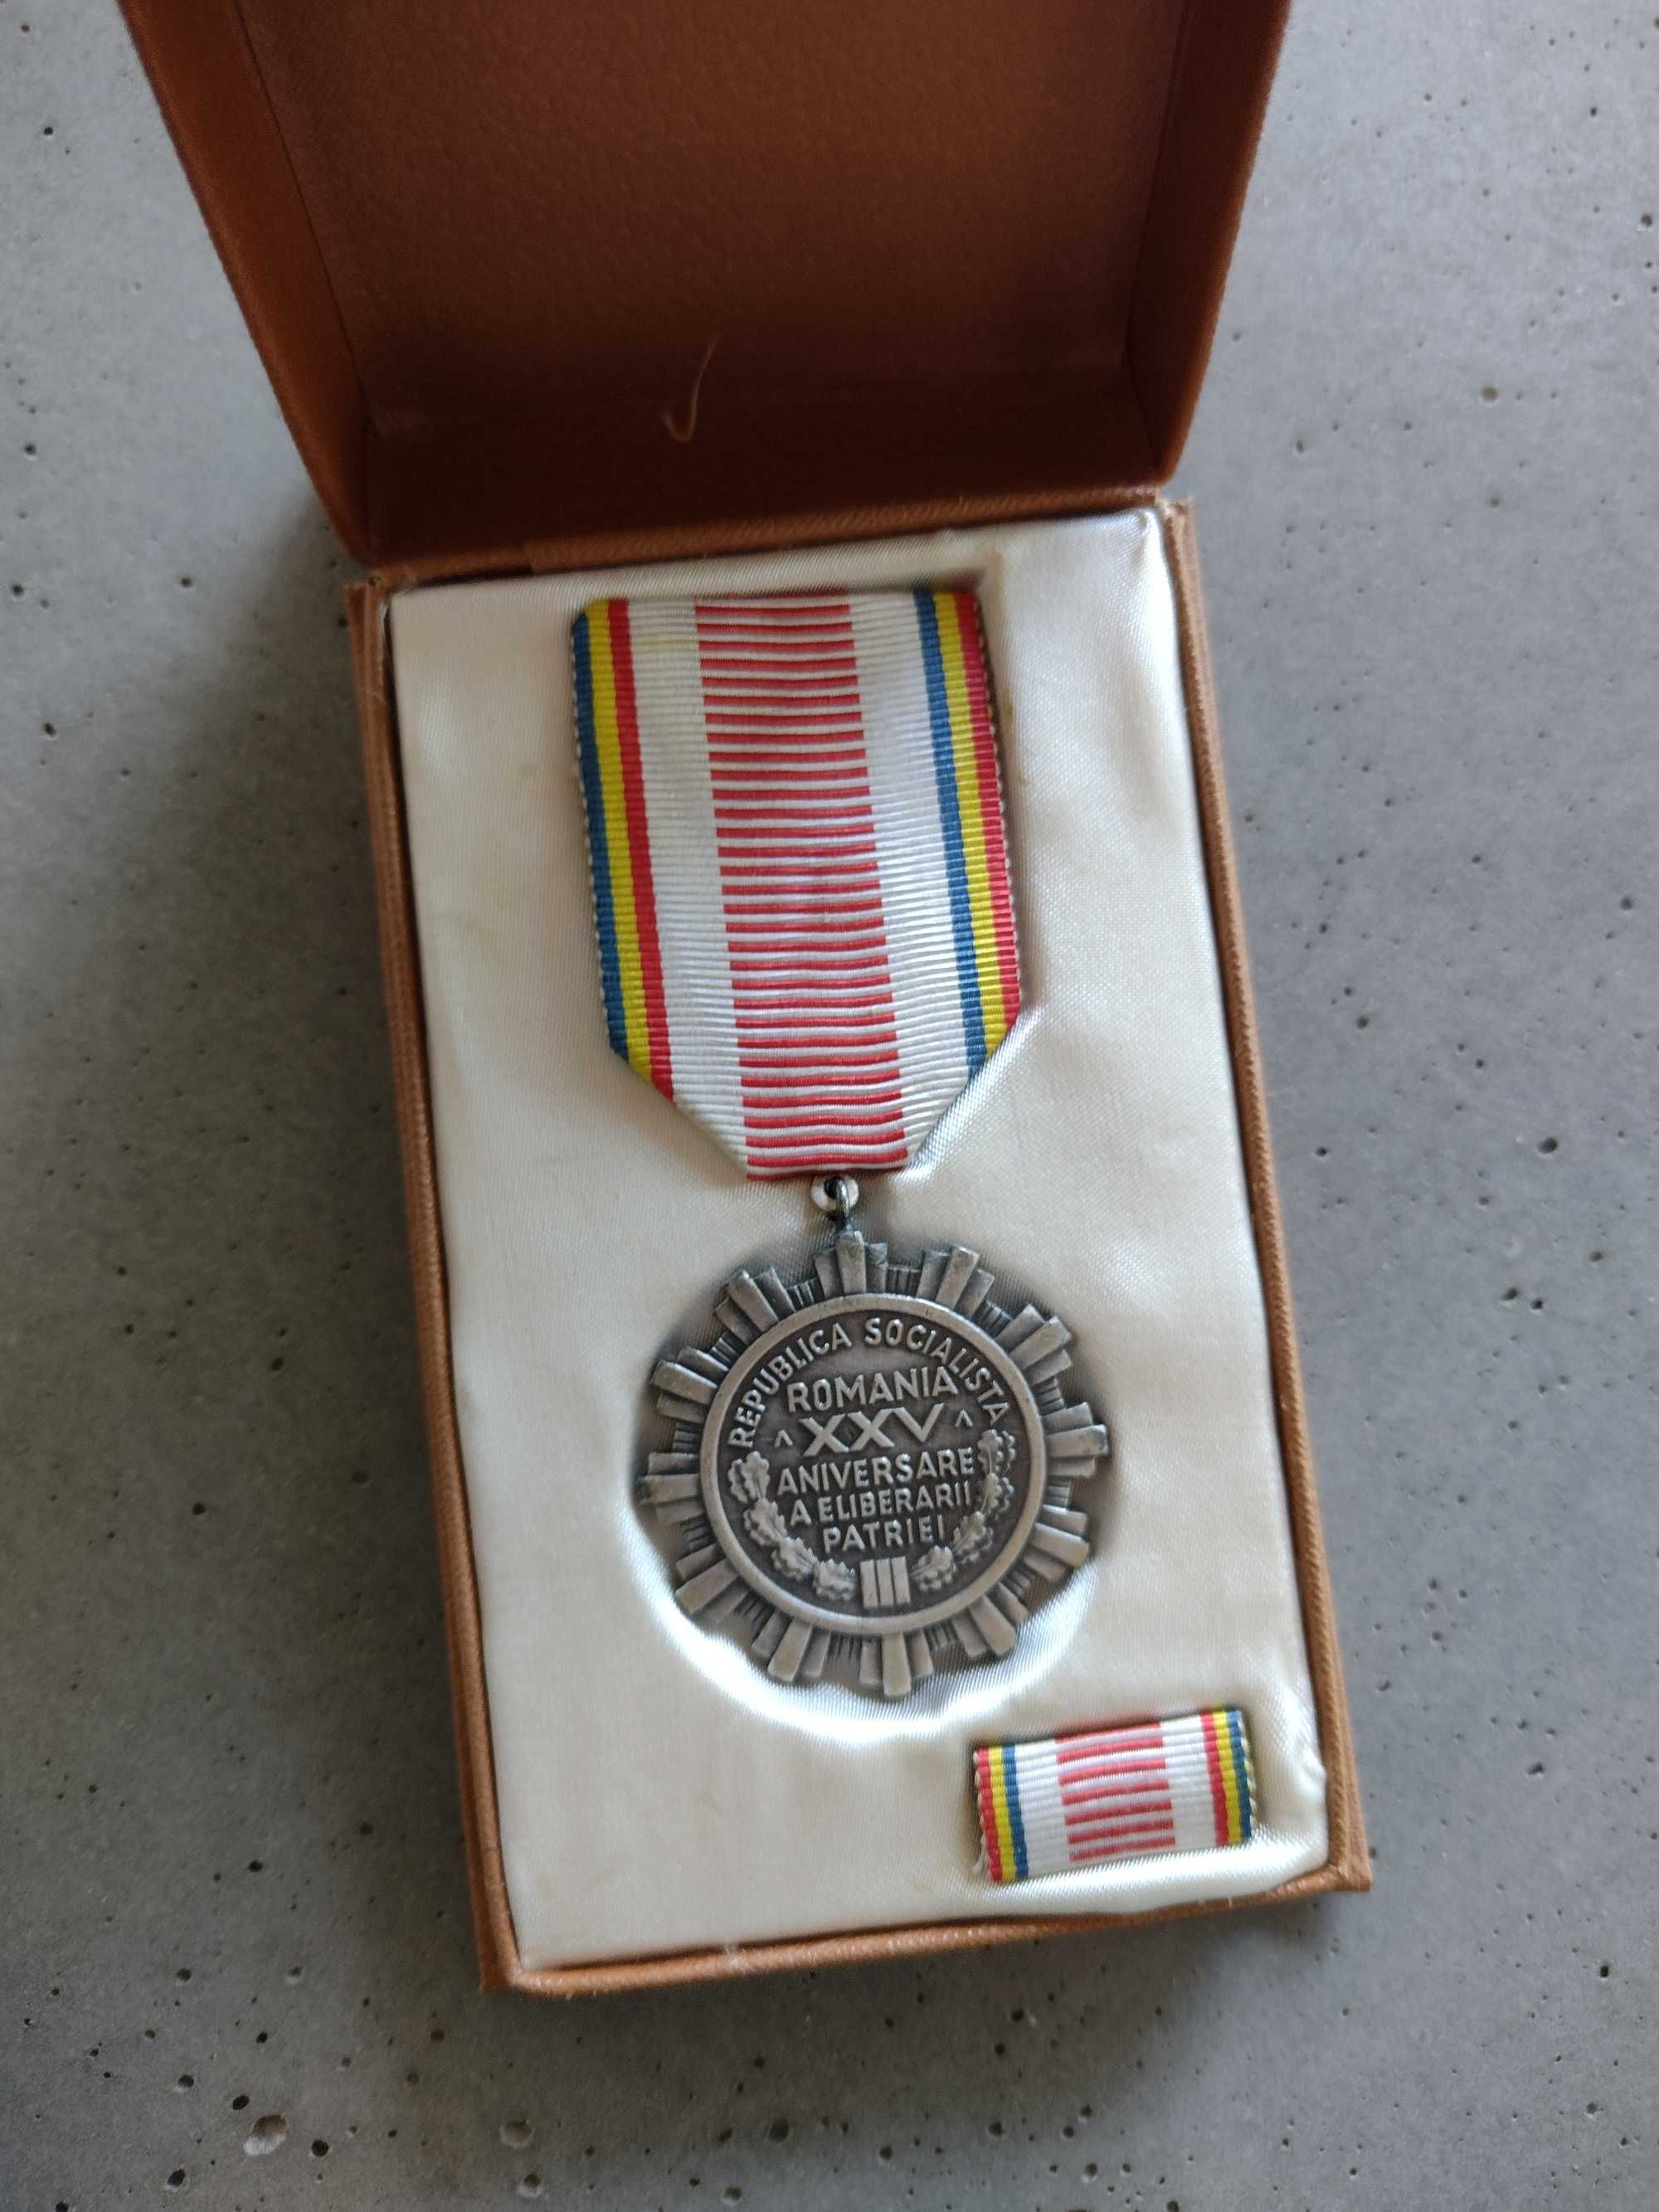 Medalia A XXV-a aniversare a eliberarii Patriei, la cutie